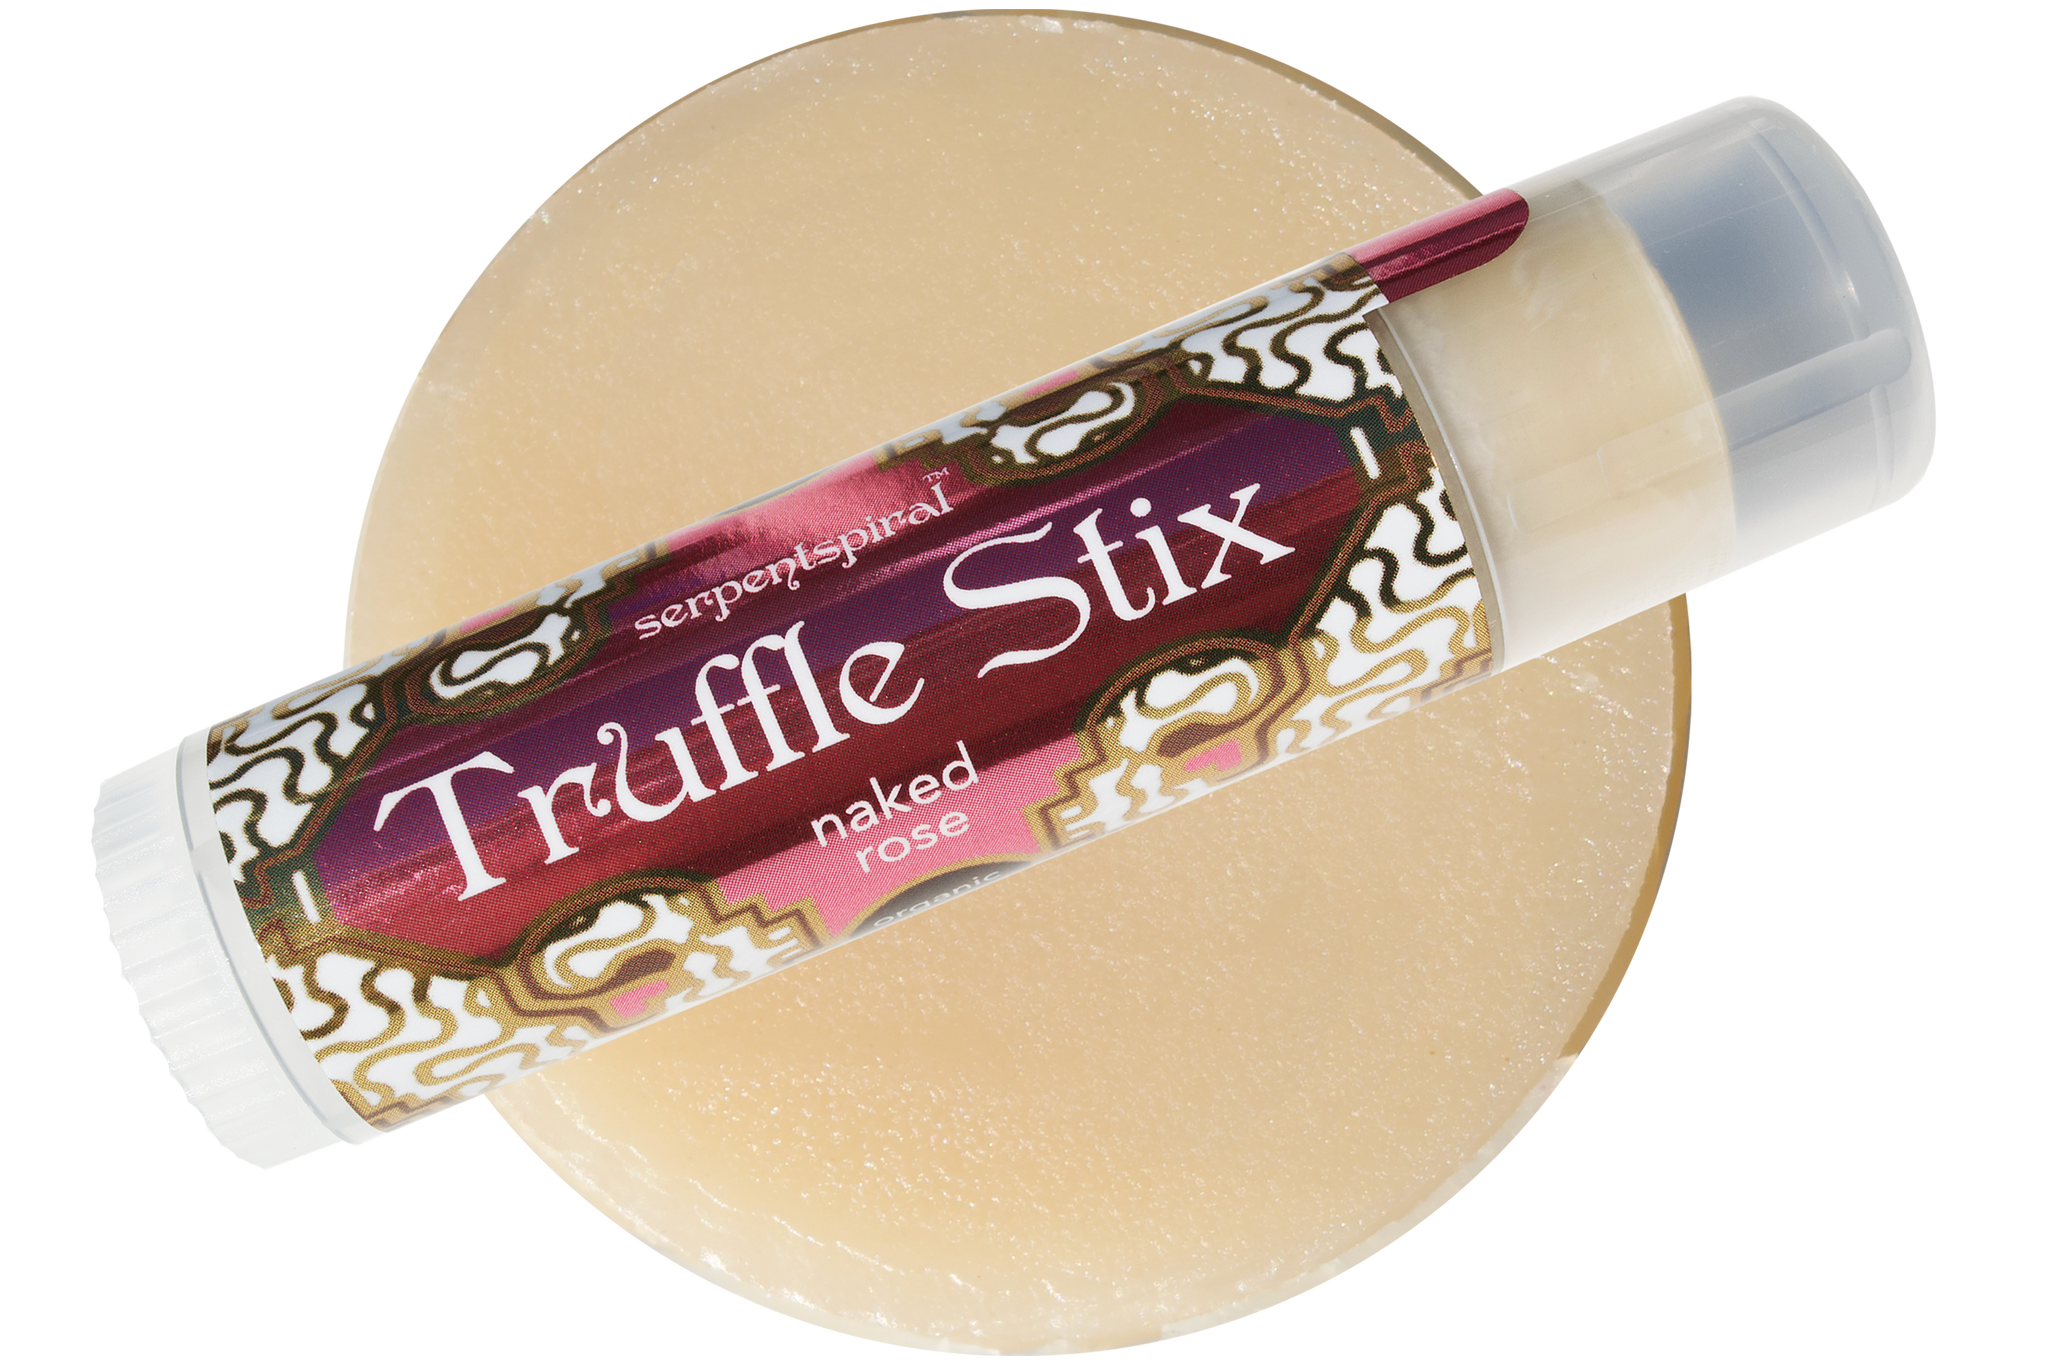 Truffle Stix ~ naked rose organic luxury chocolate lip balm